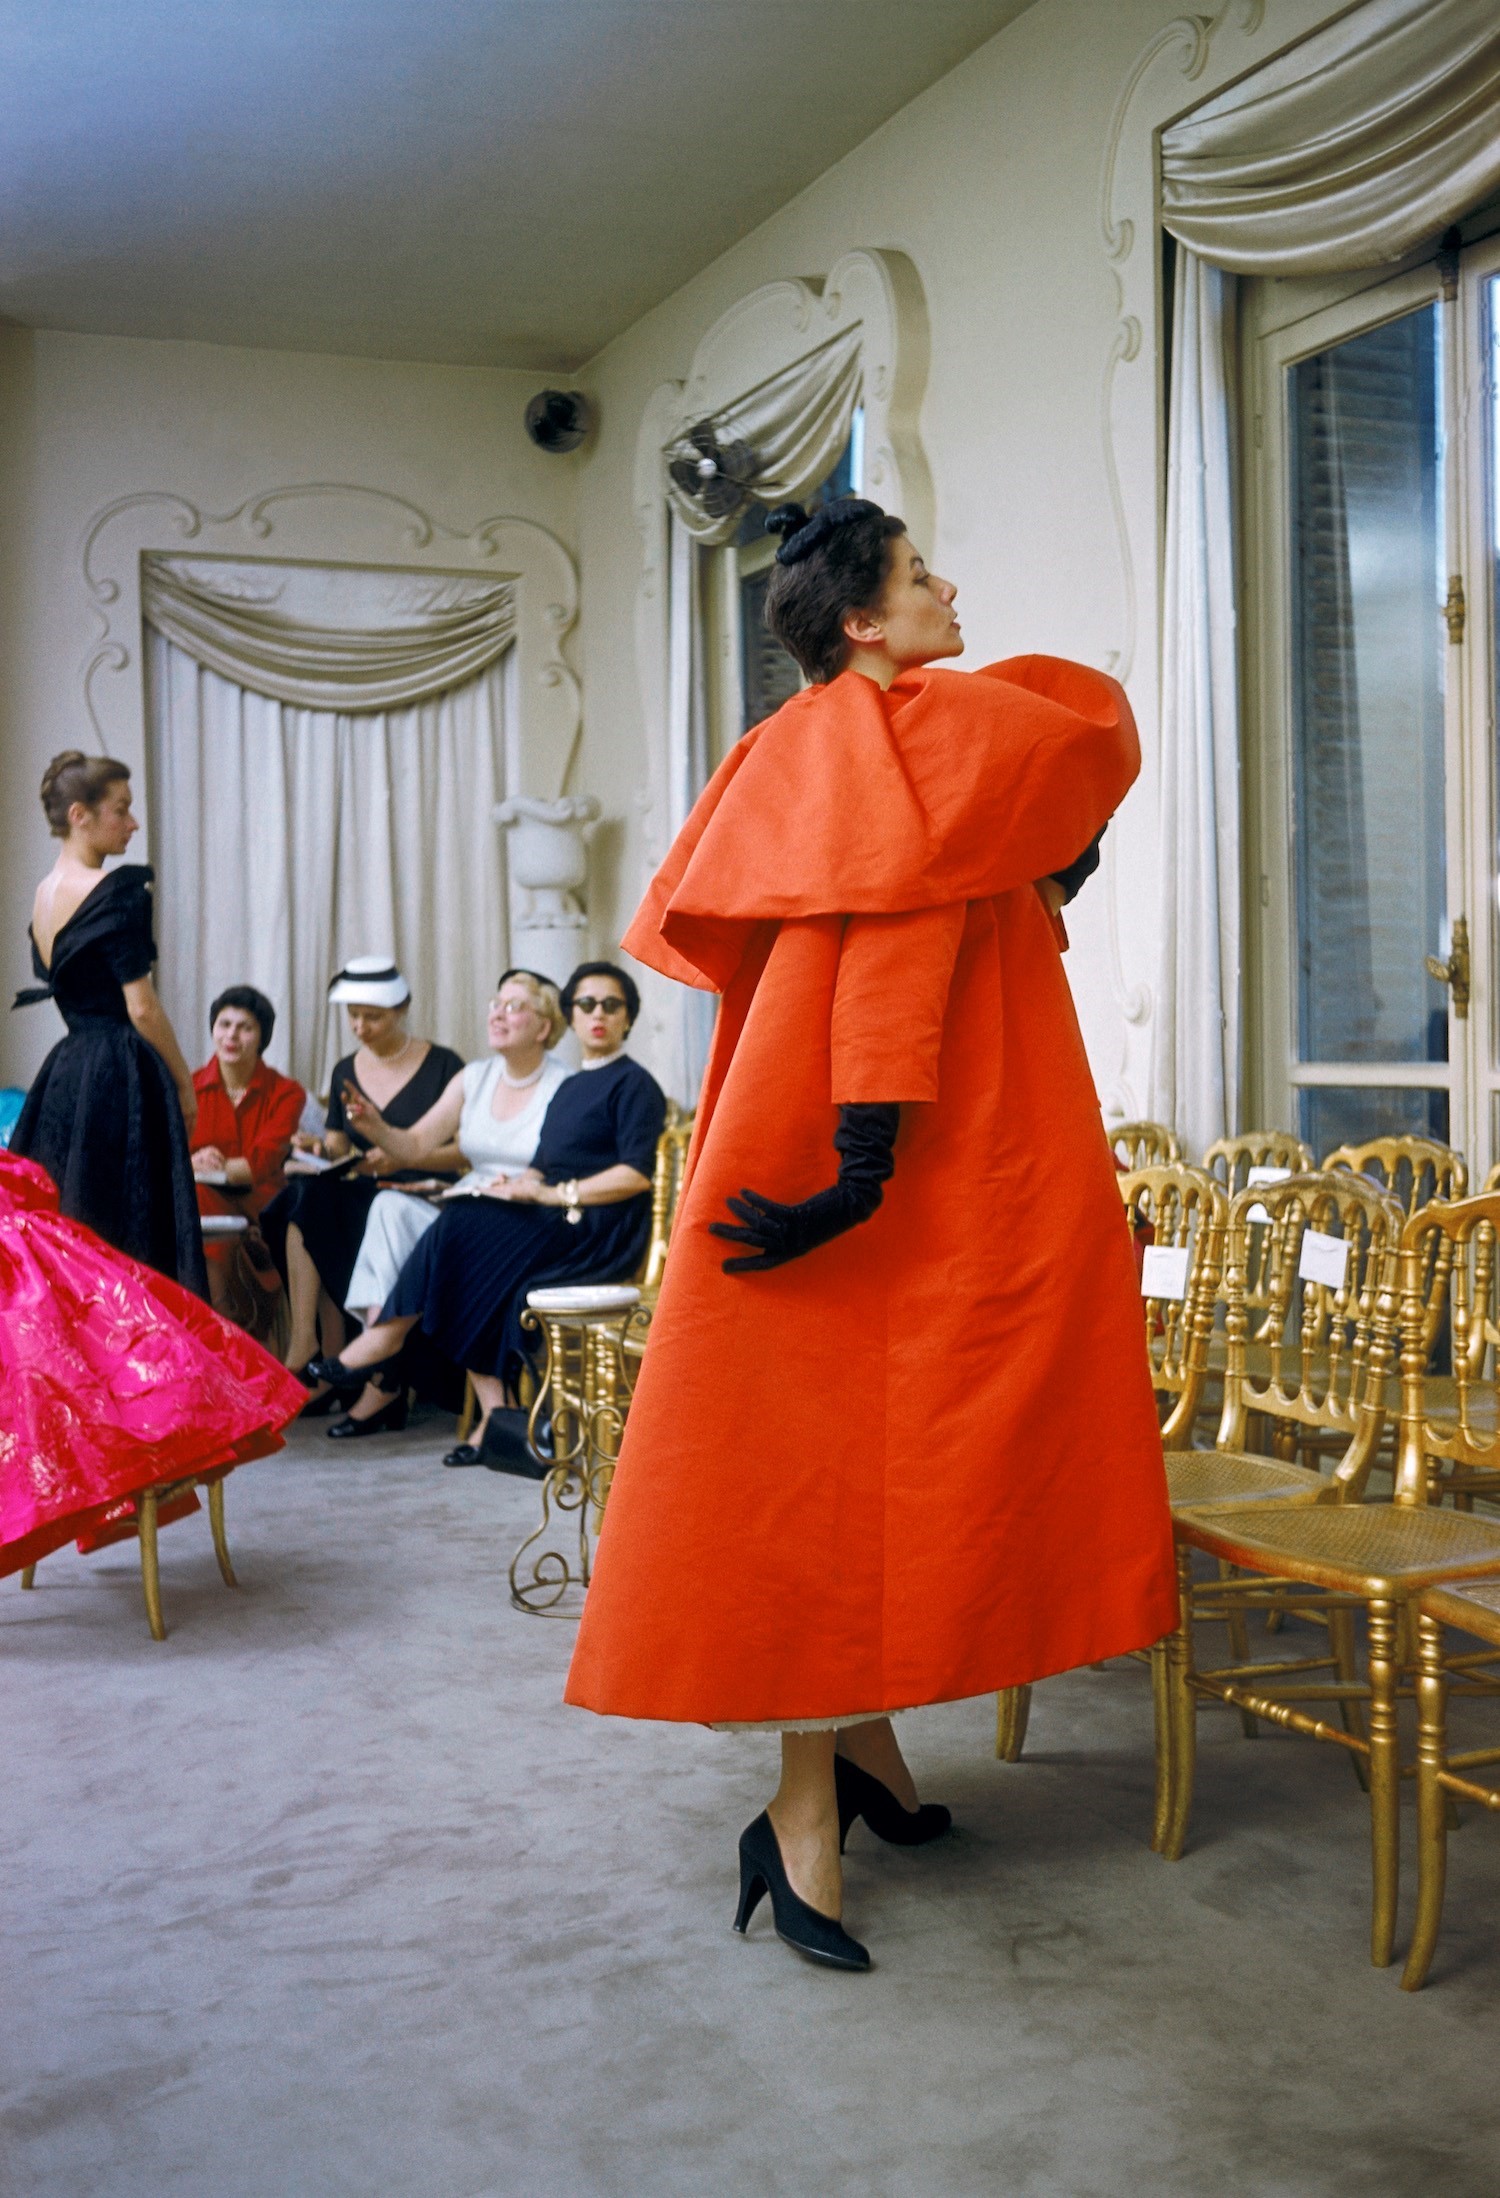 Why Balenciaga's Designer Was So Influential